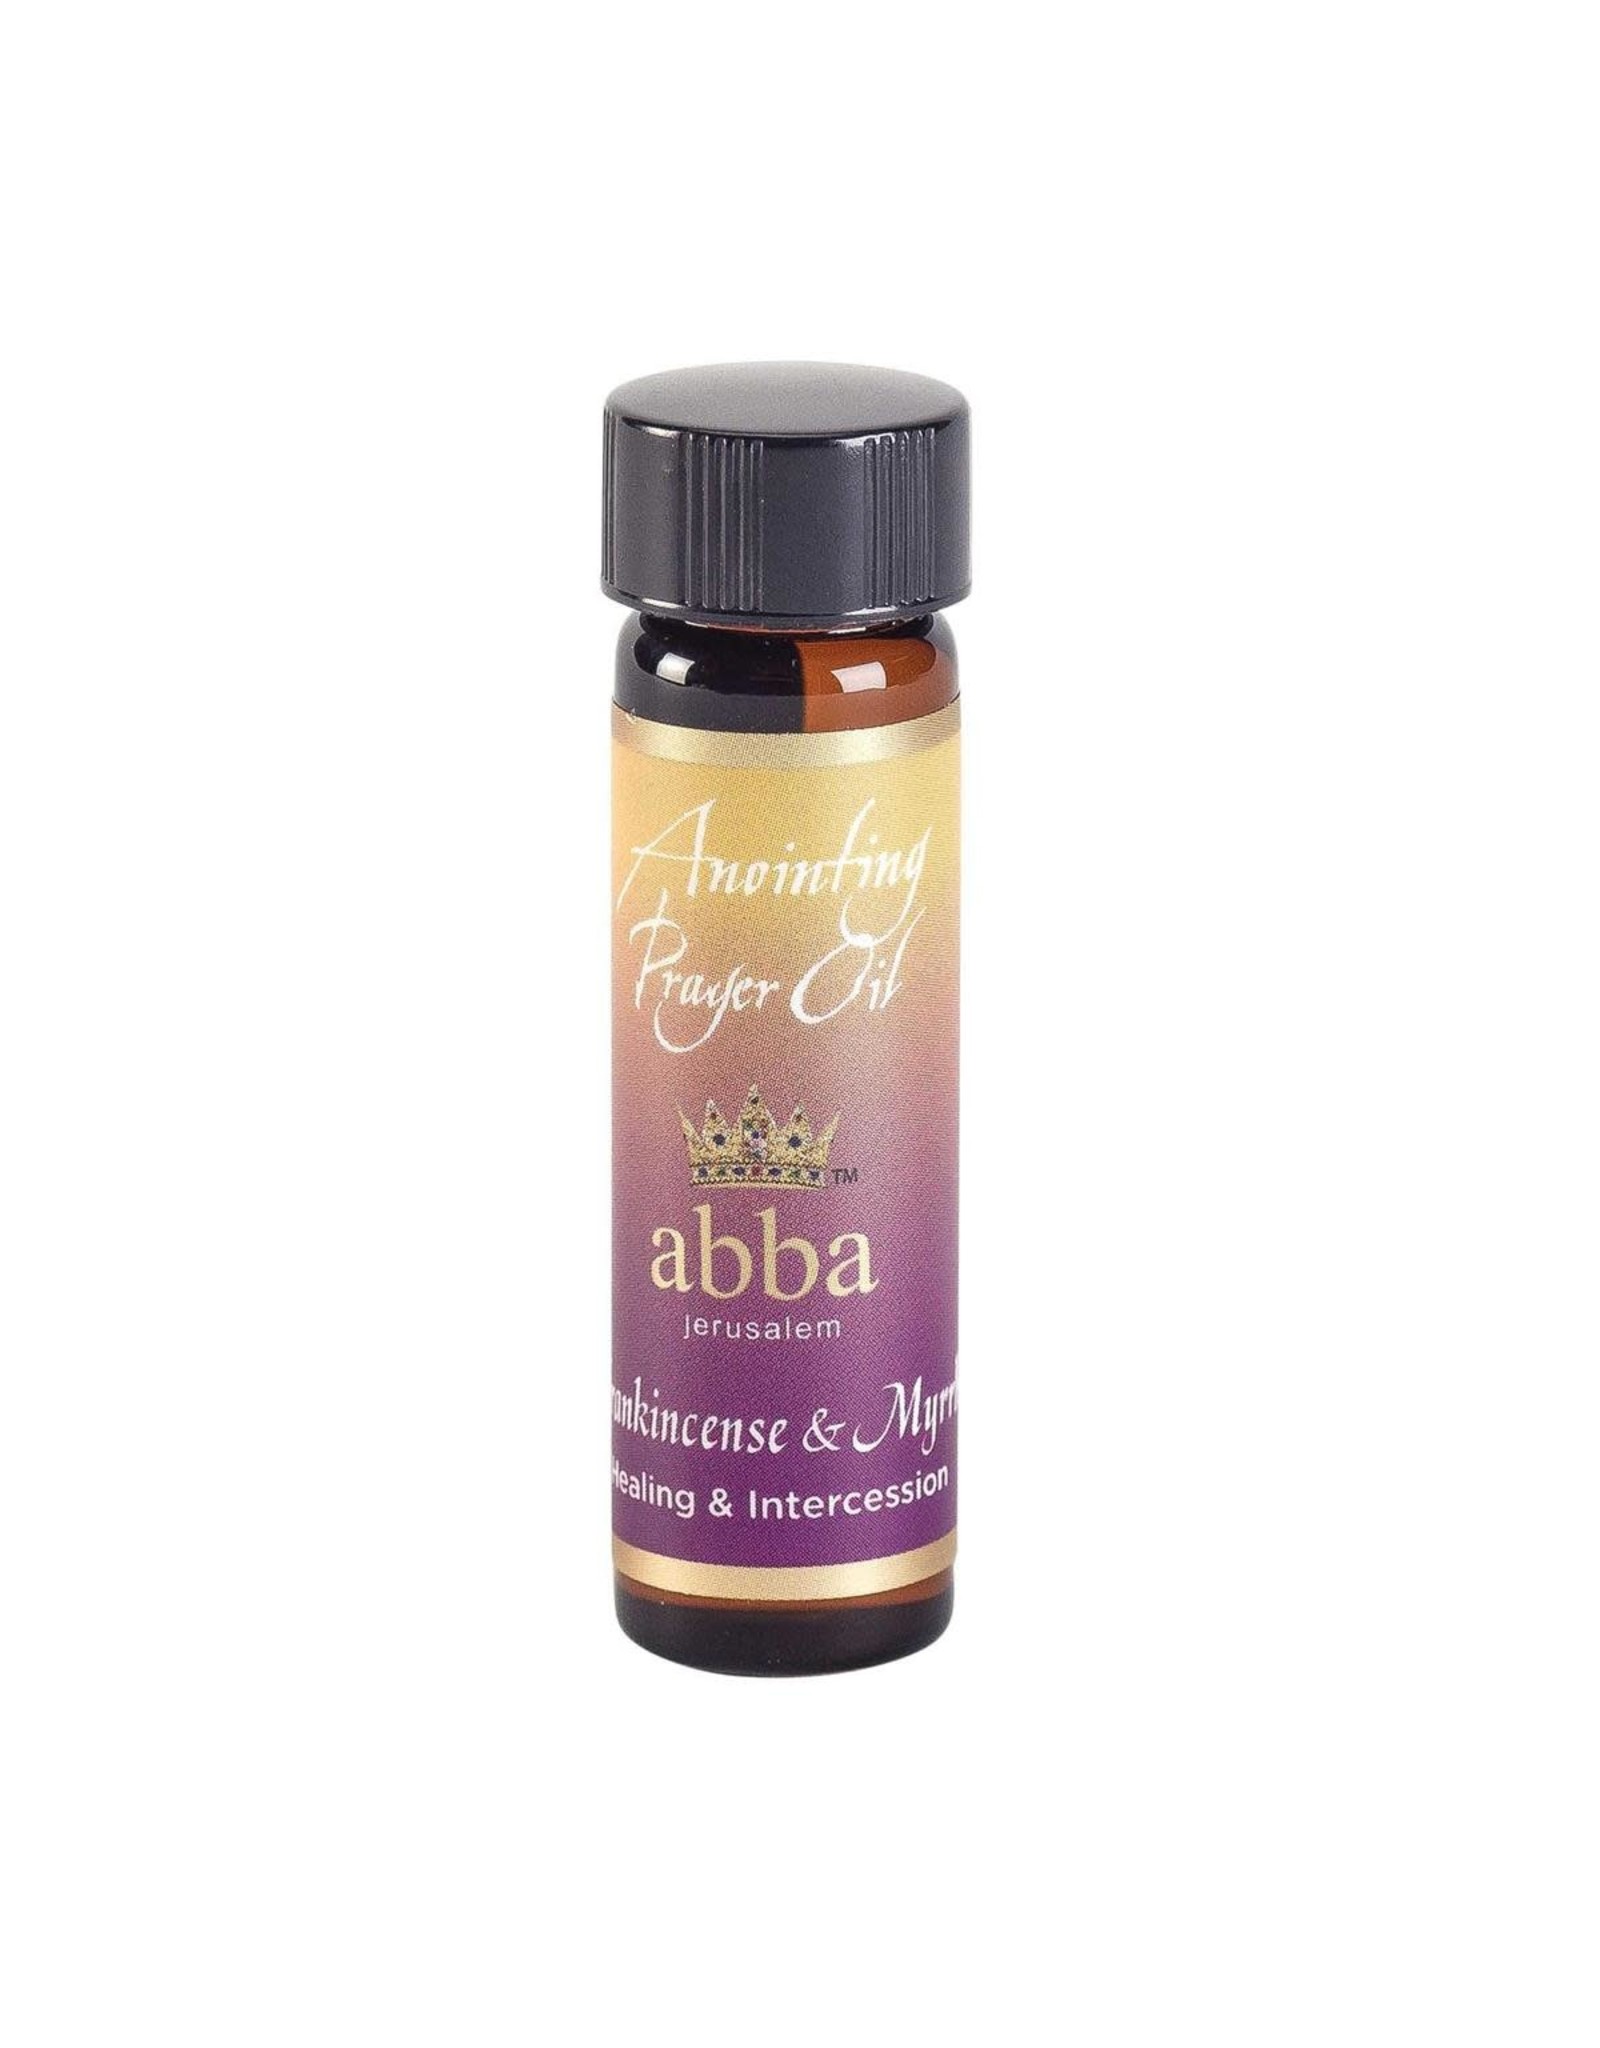 Abba Oil Anointing Oil - Frankincense & Myrrh (Healing & Intercession),